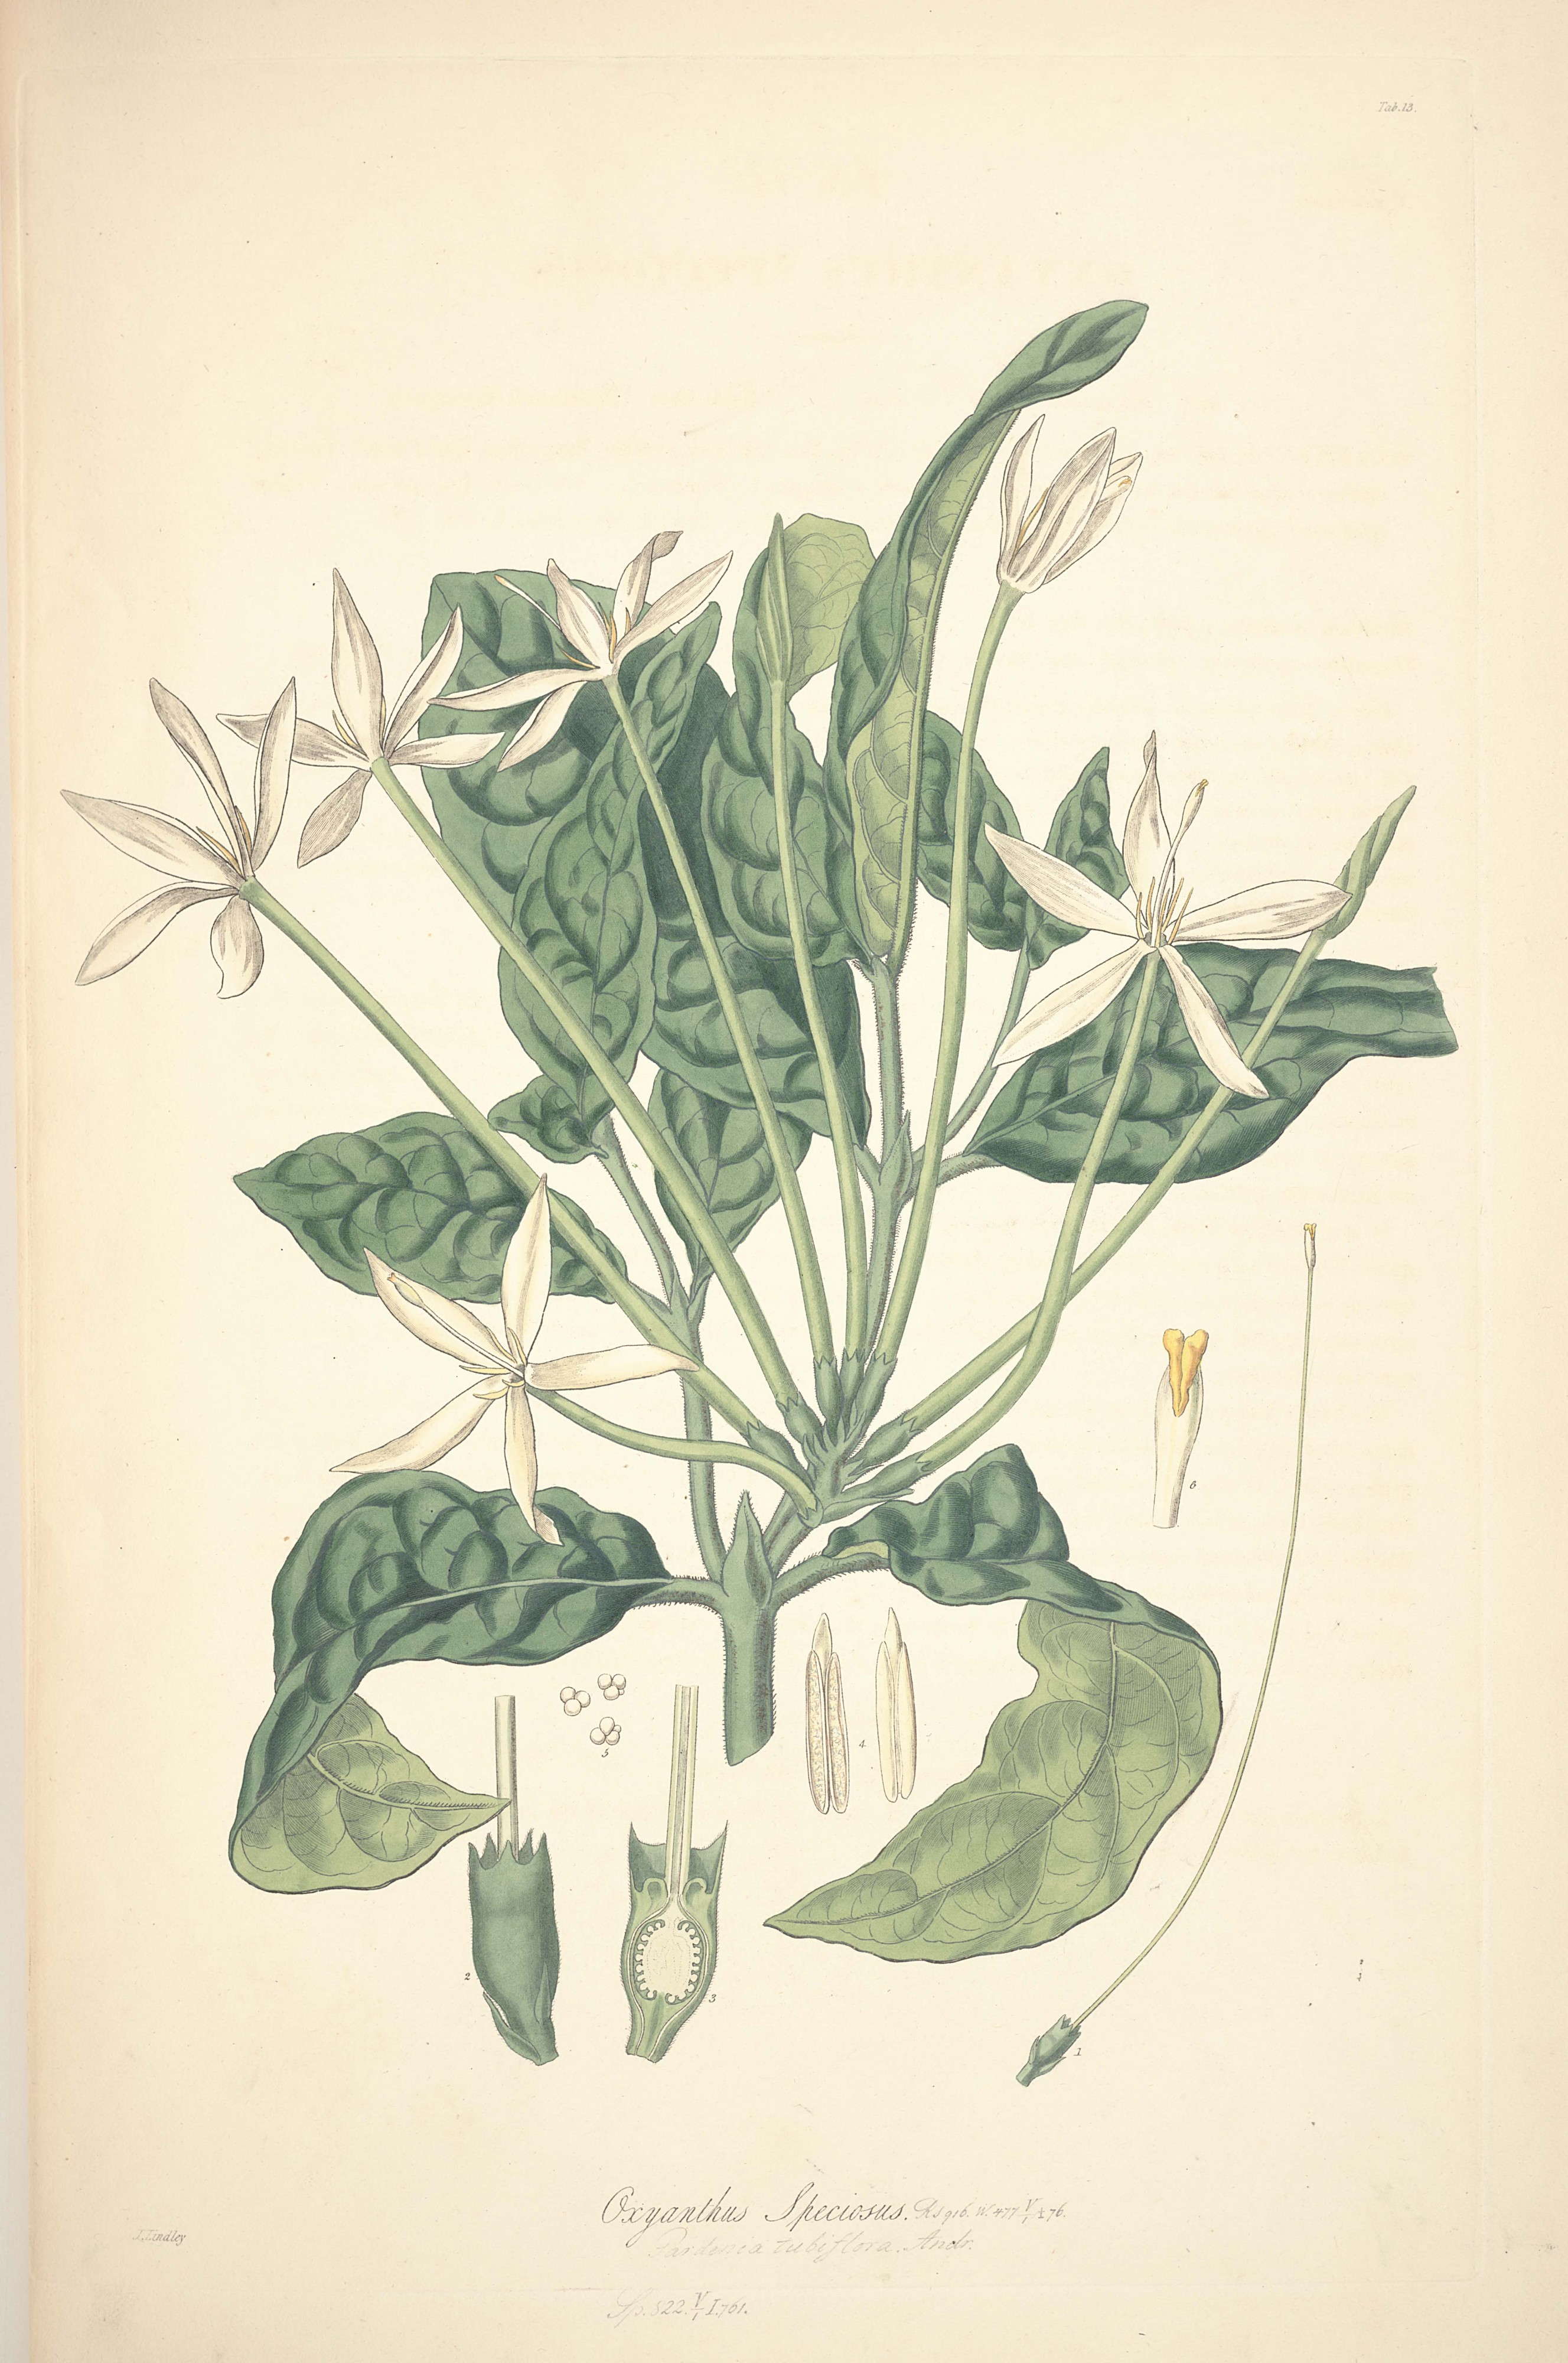 13 Oxyanthus speciosus - John Lindley - Collectanea botanica (1821)